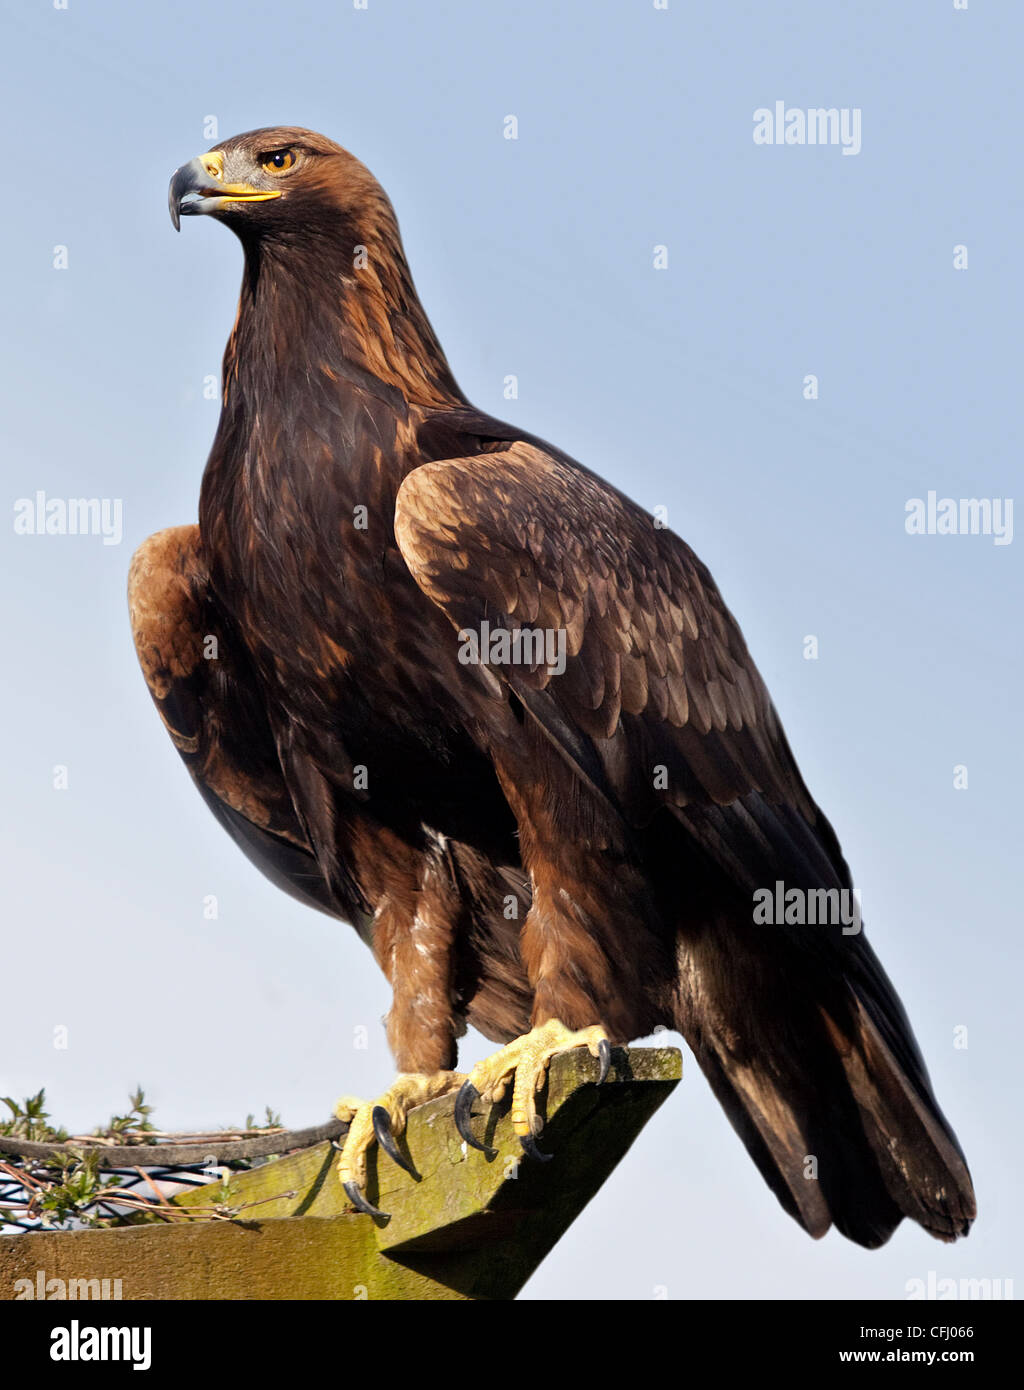 águila real fotografías e imágenes de alta resolución - Alamy